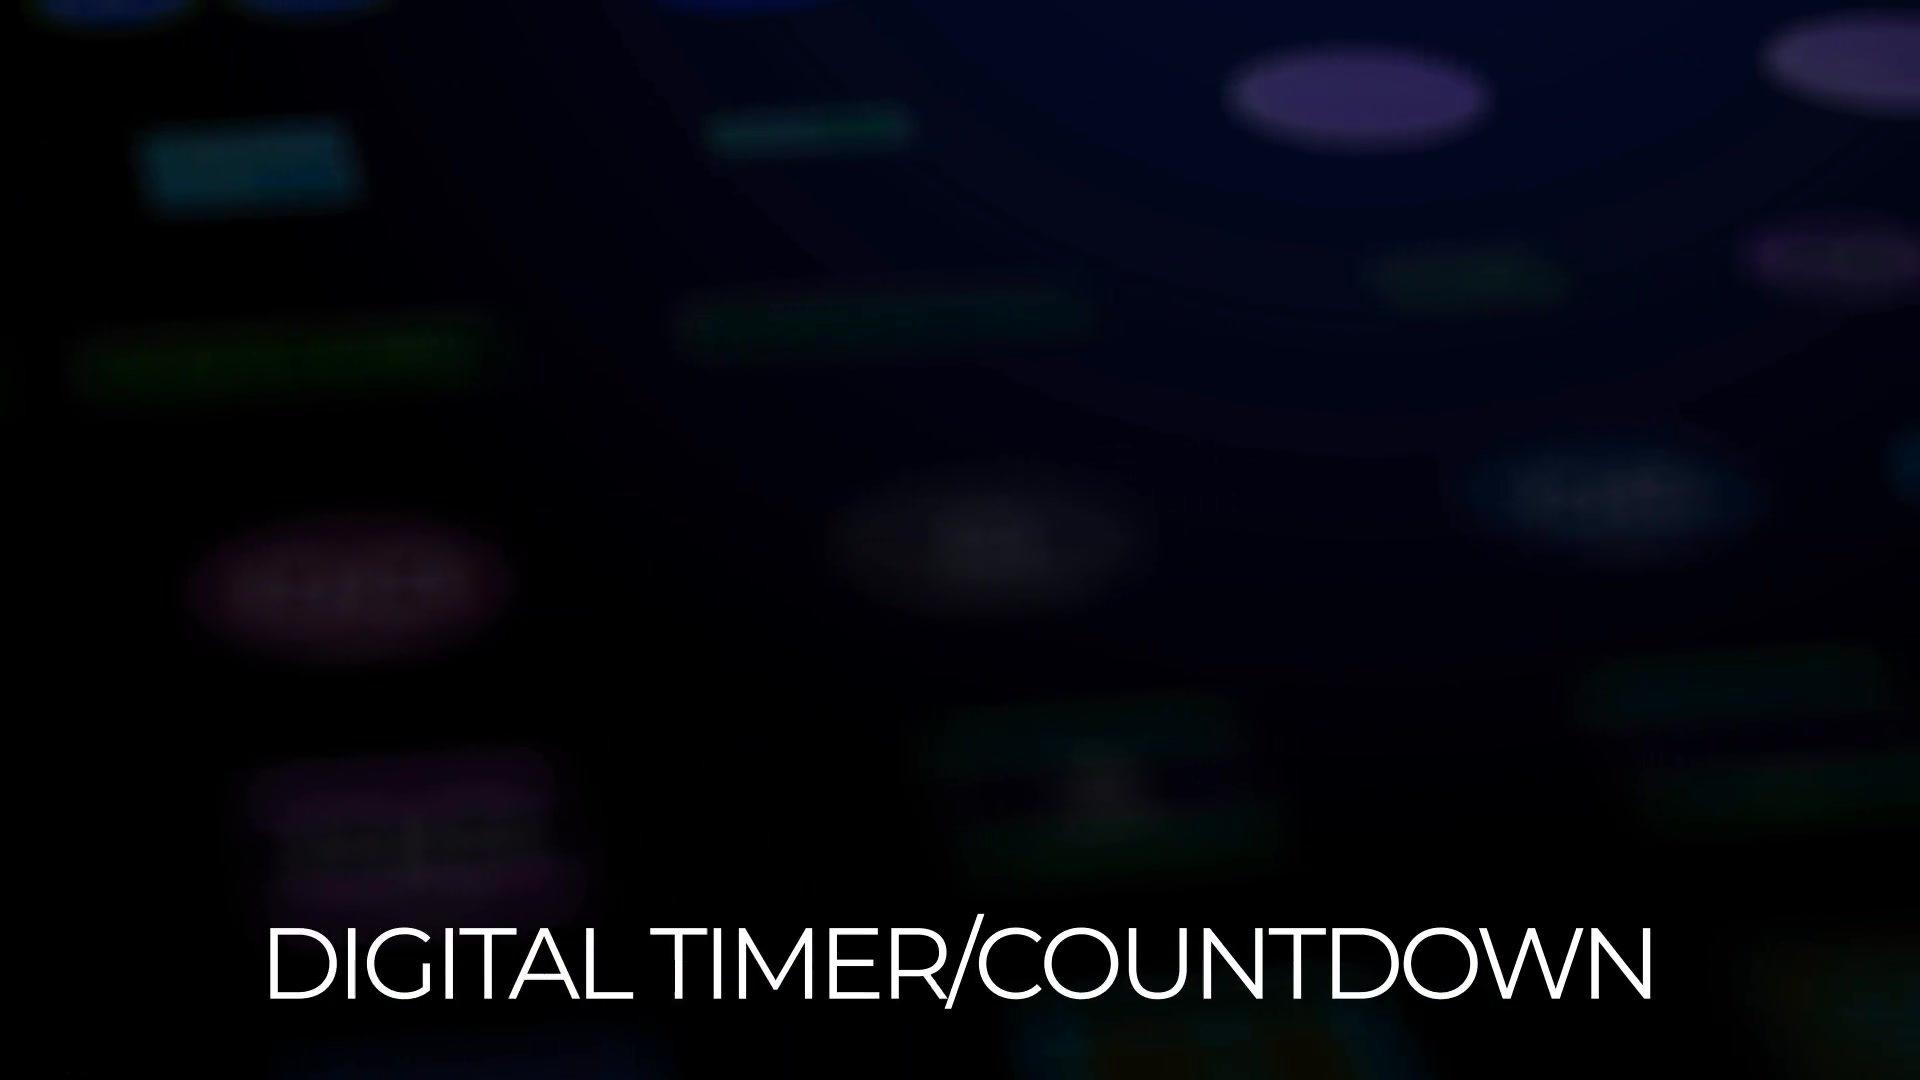 Countdown Timer toolkit 